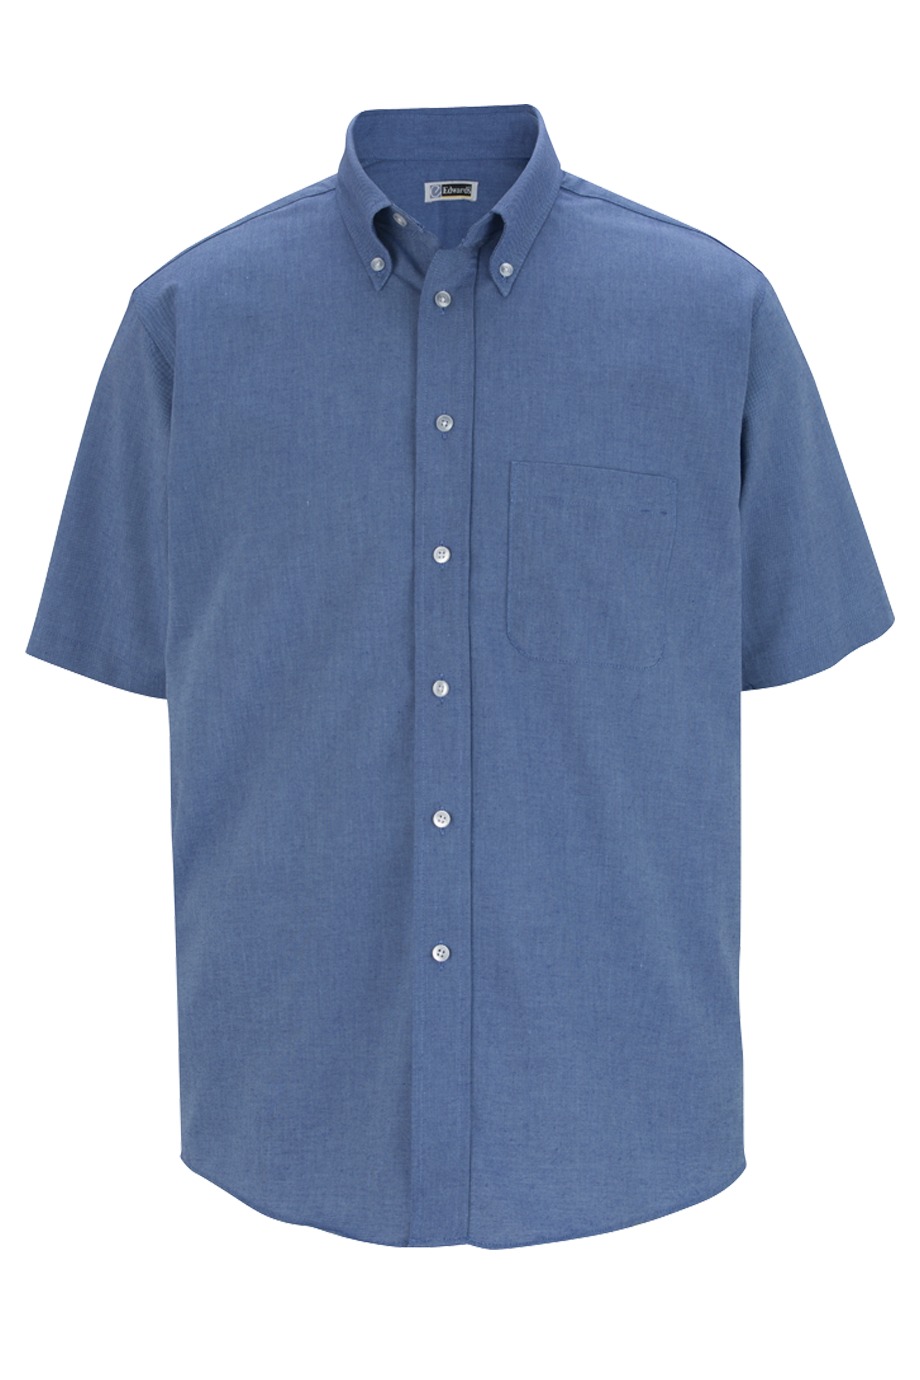 Men's SS Dress Shirt, French Blue, LYNX